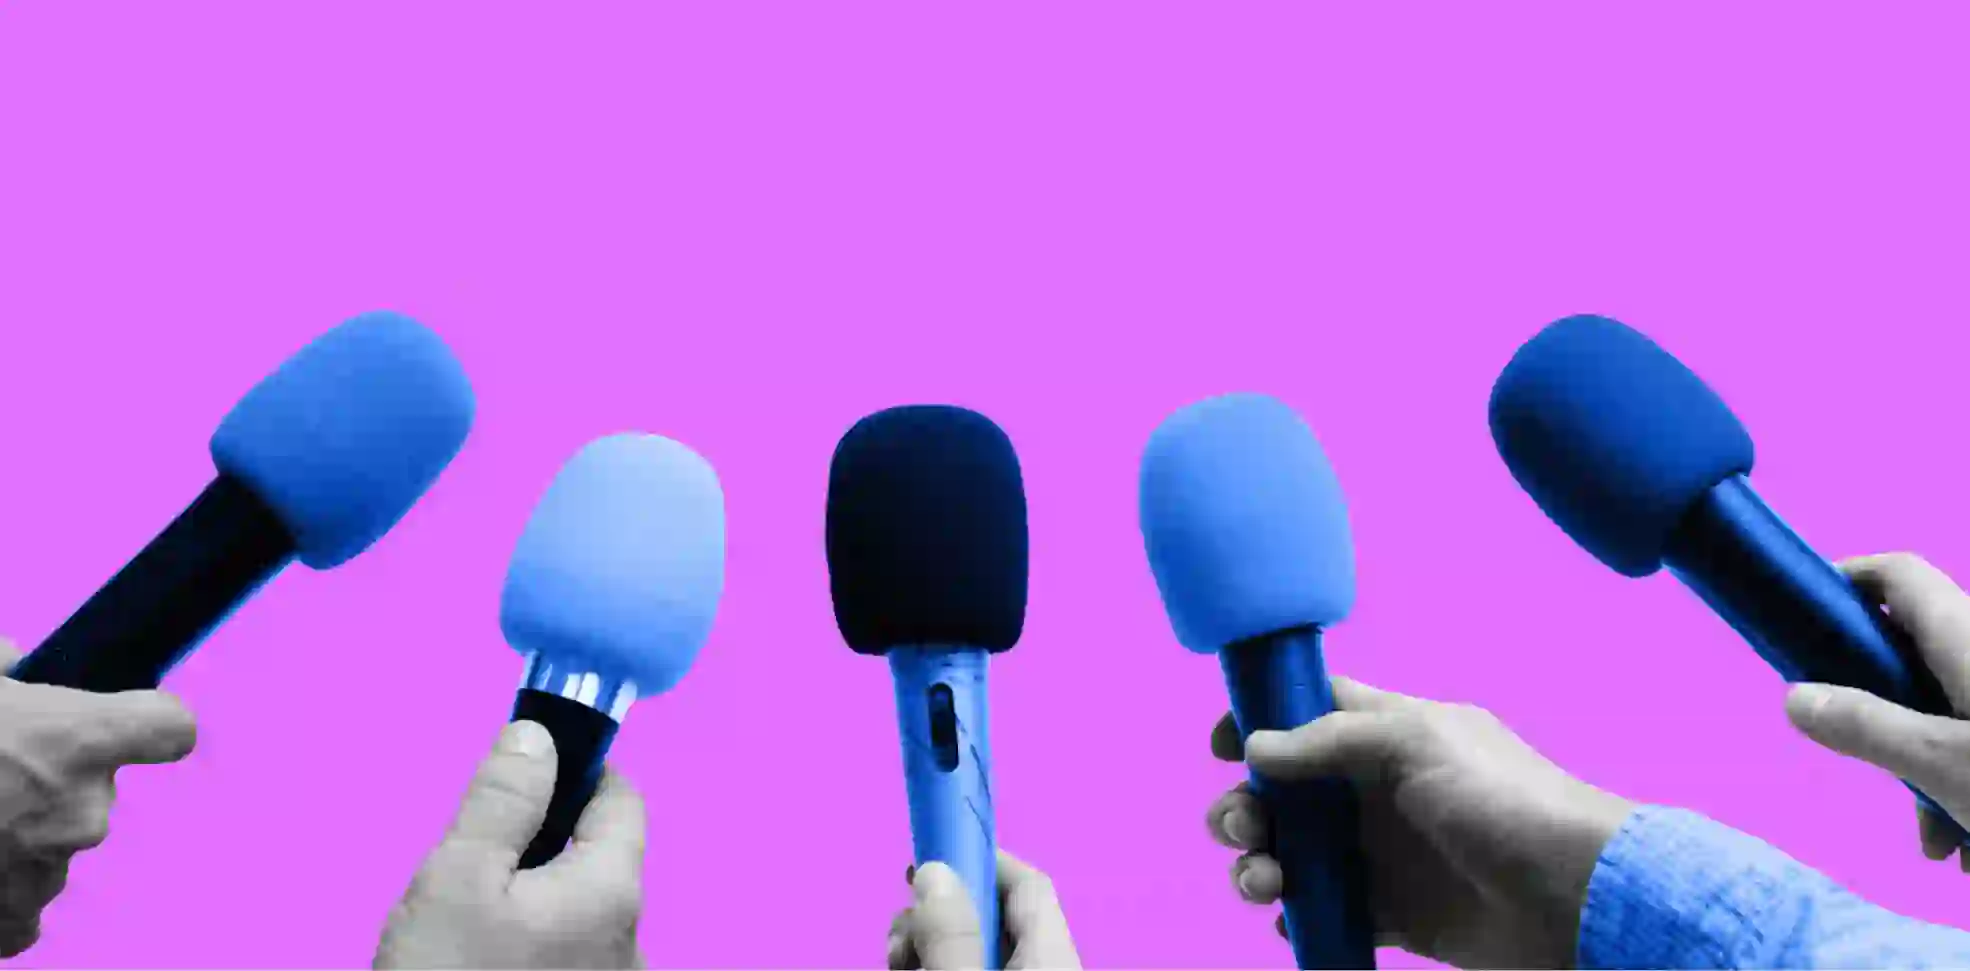 microphones in hands on purple background